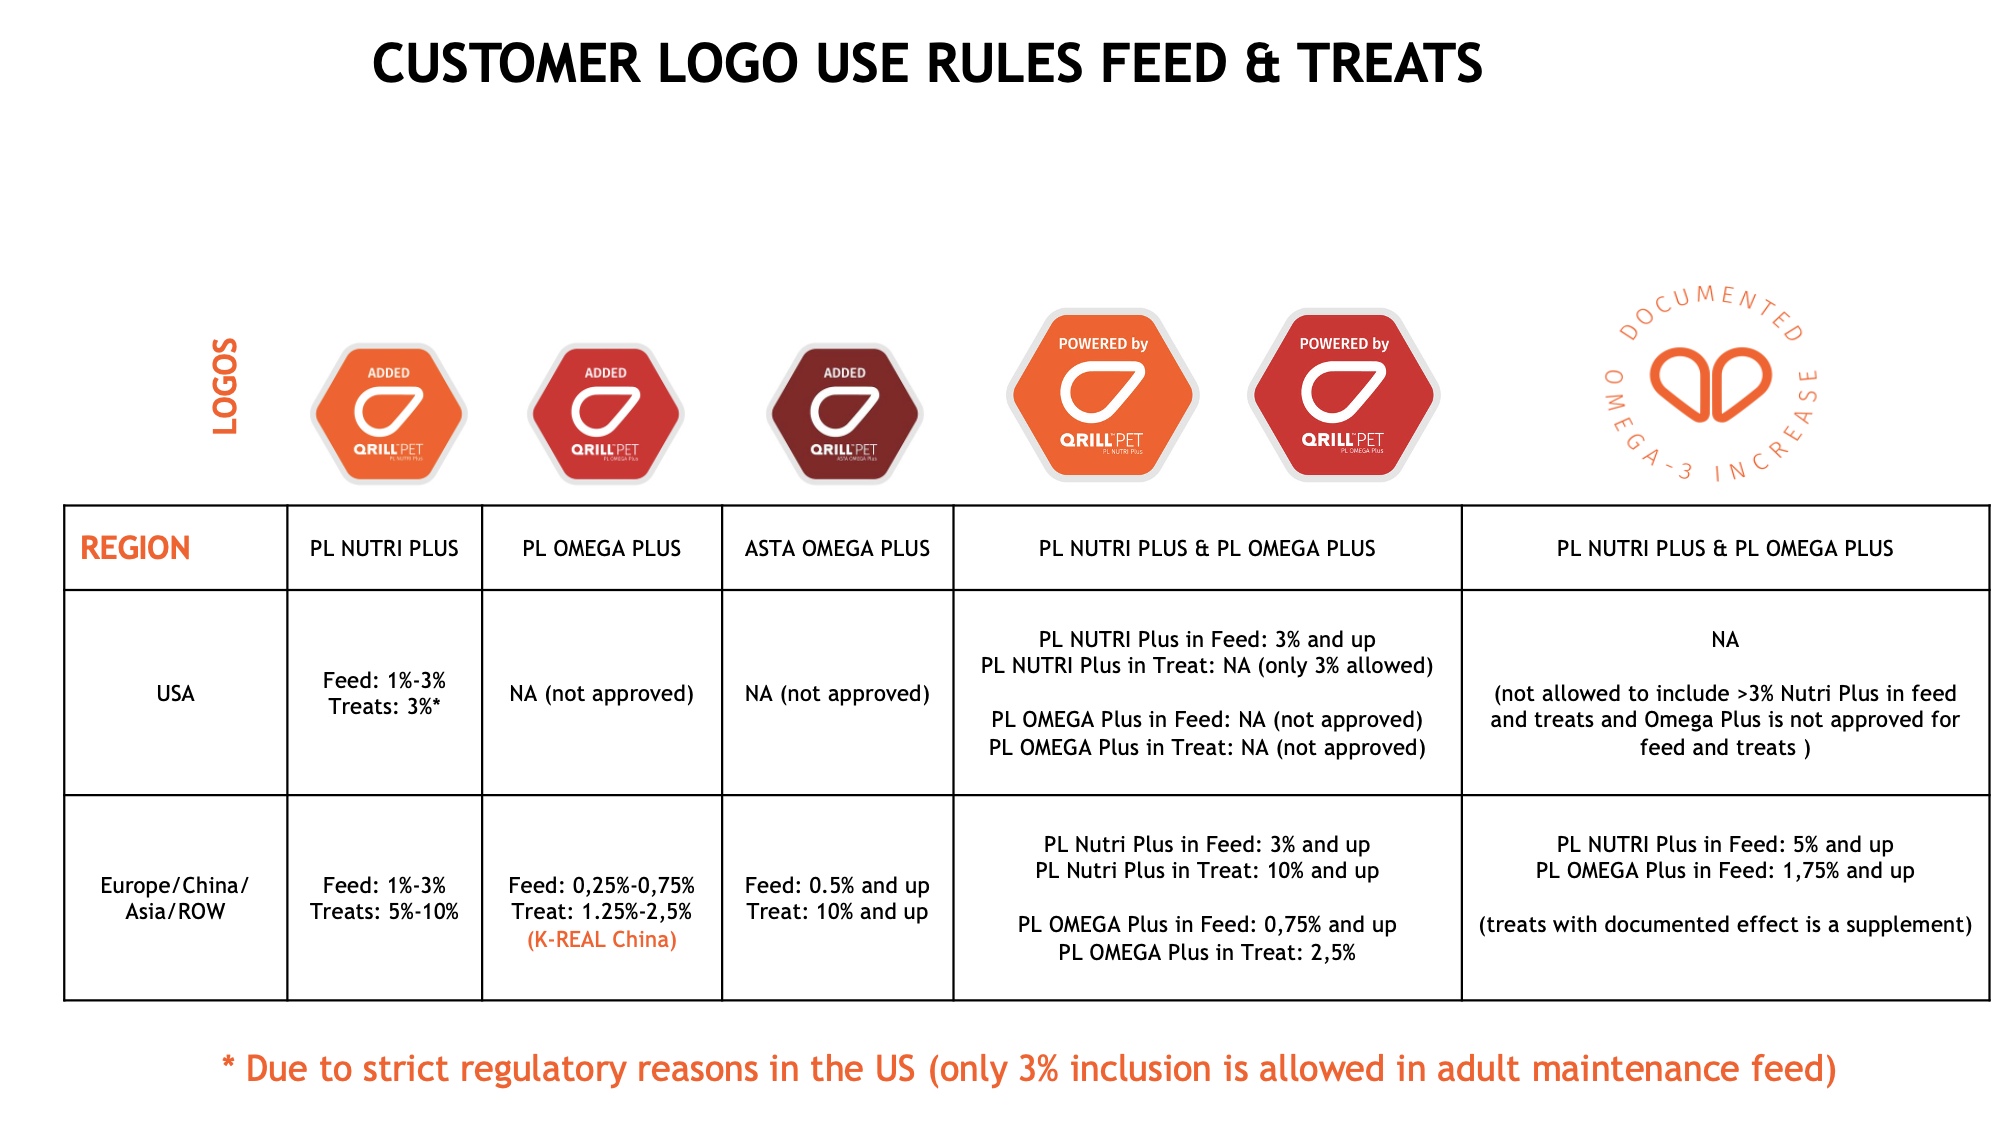 Customers Logos Use Rules for Feed & Treats